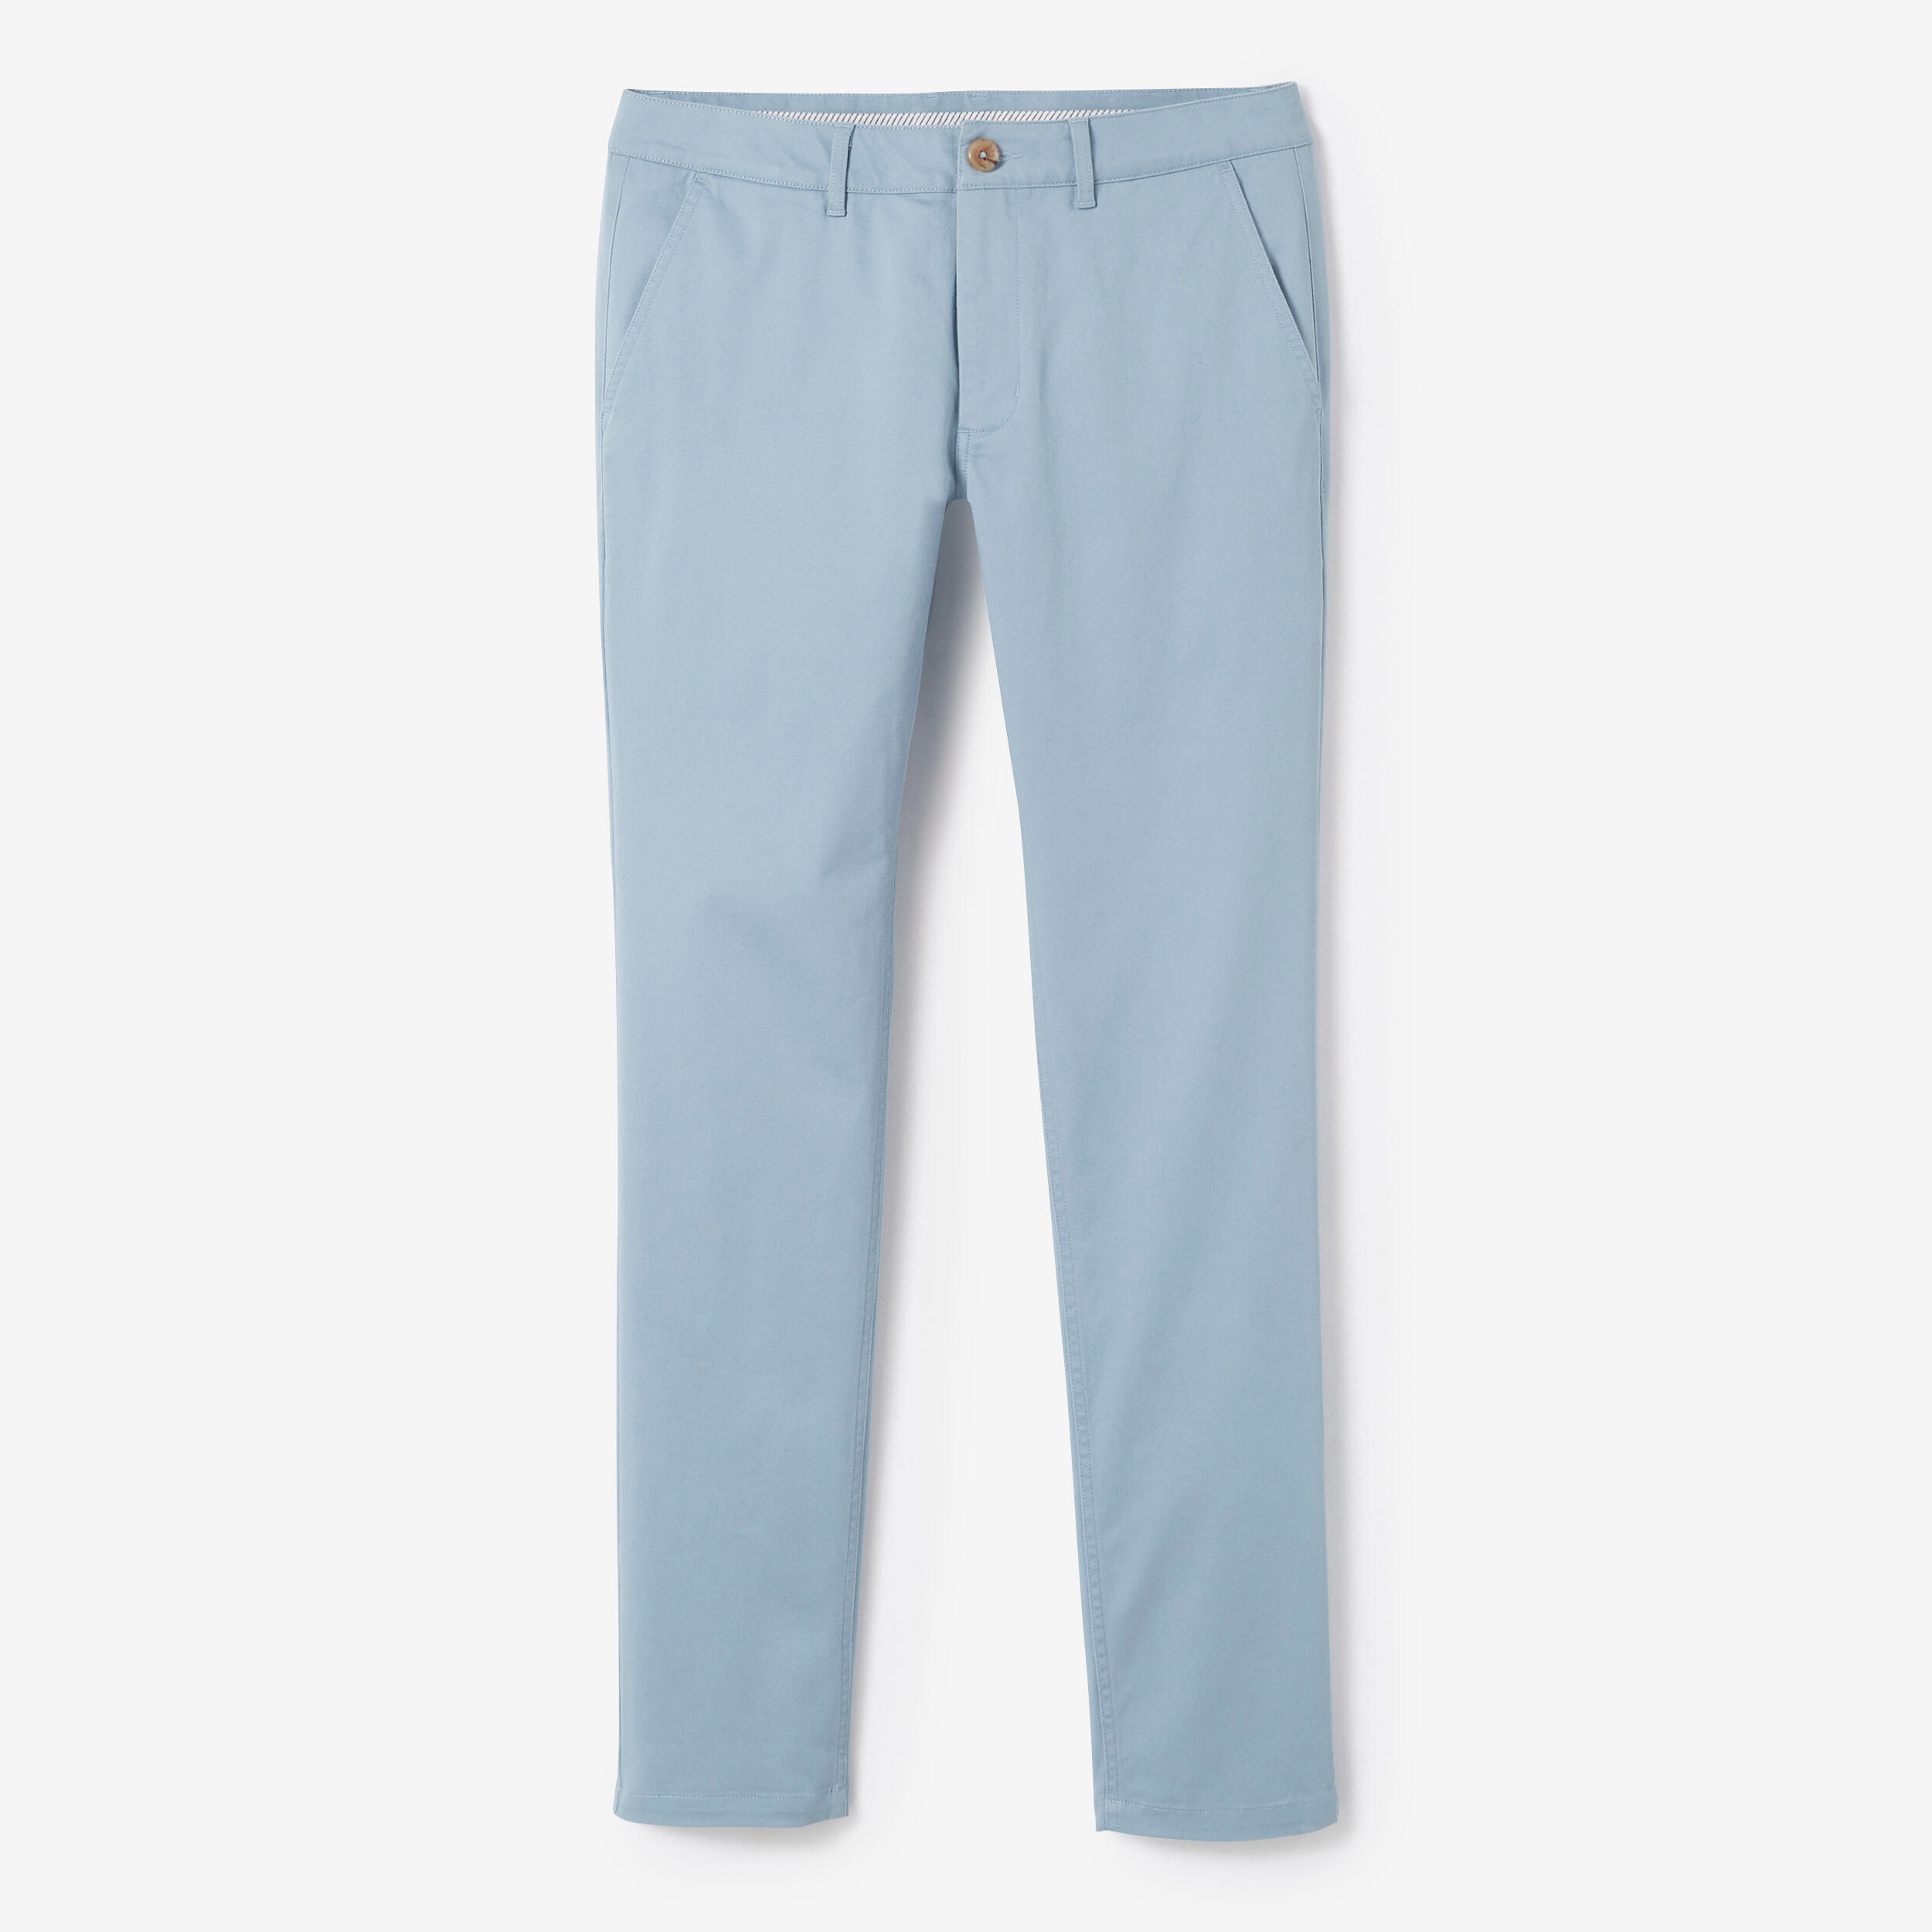 Men's golf trousers - MW500 denim blue 5/6